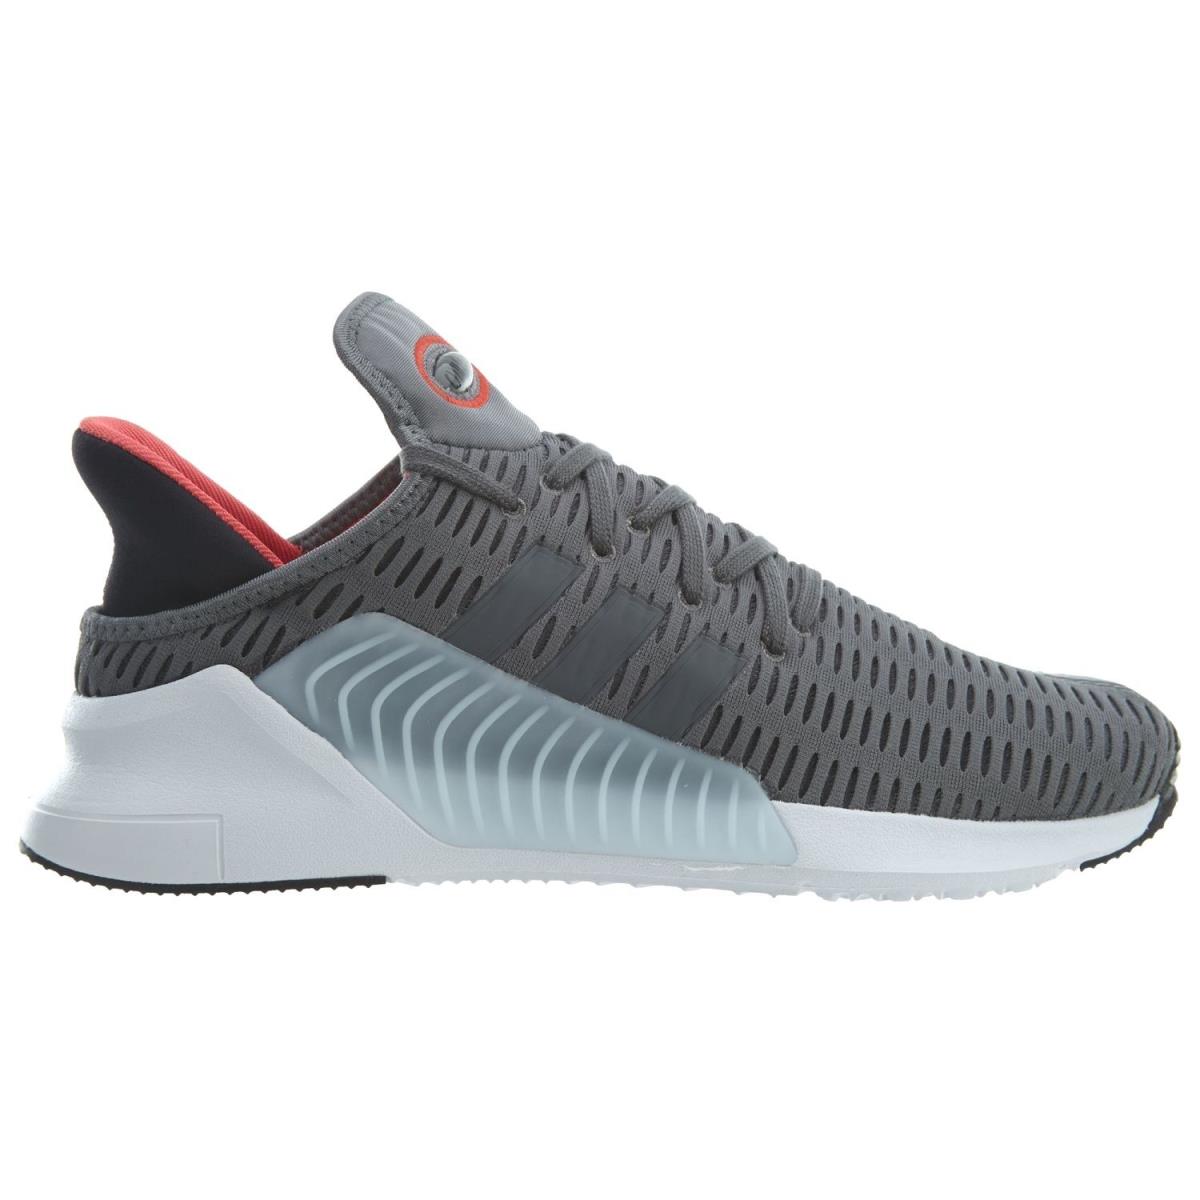 Adidas Climacool 02/17 Grey Grey White Running Sneaker CG3346 463 Men`s Shoes - Grey Four/Grey Five/Footwear White , Grey Four/Grey Five/Footwear White Manufacturer